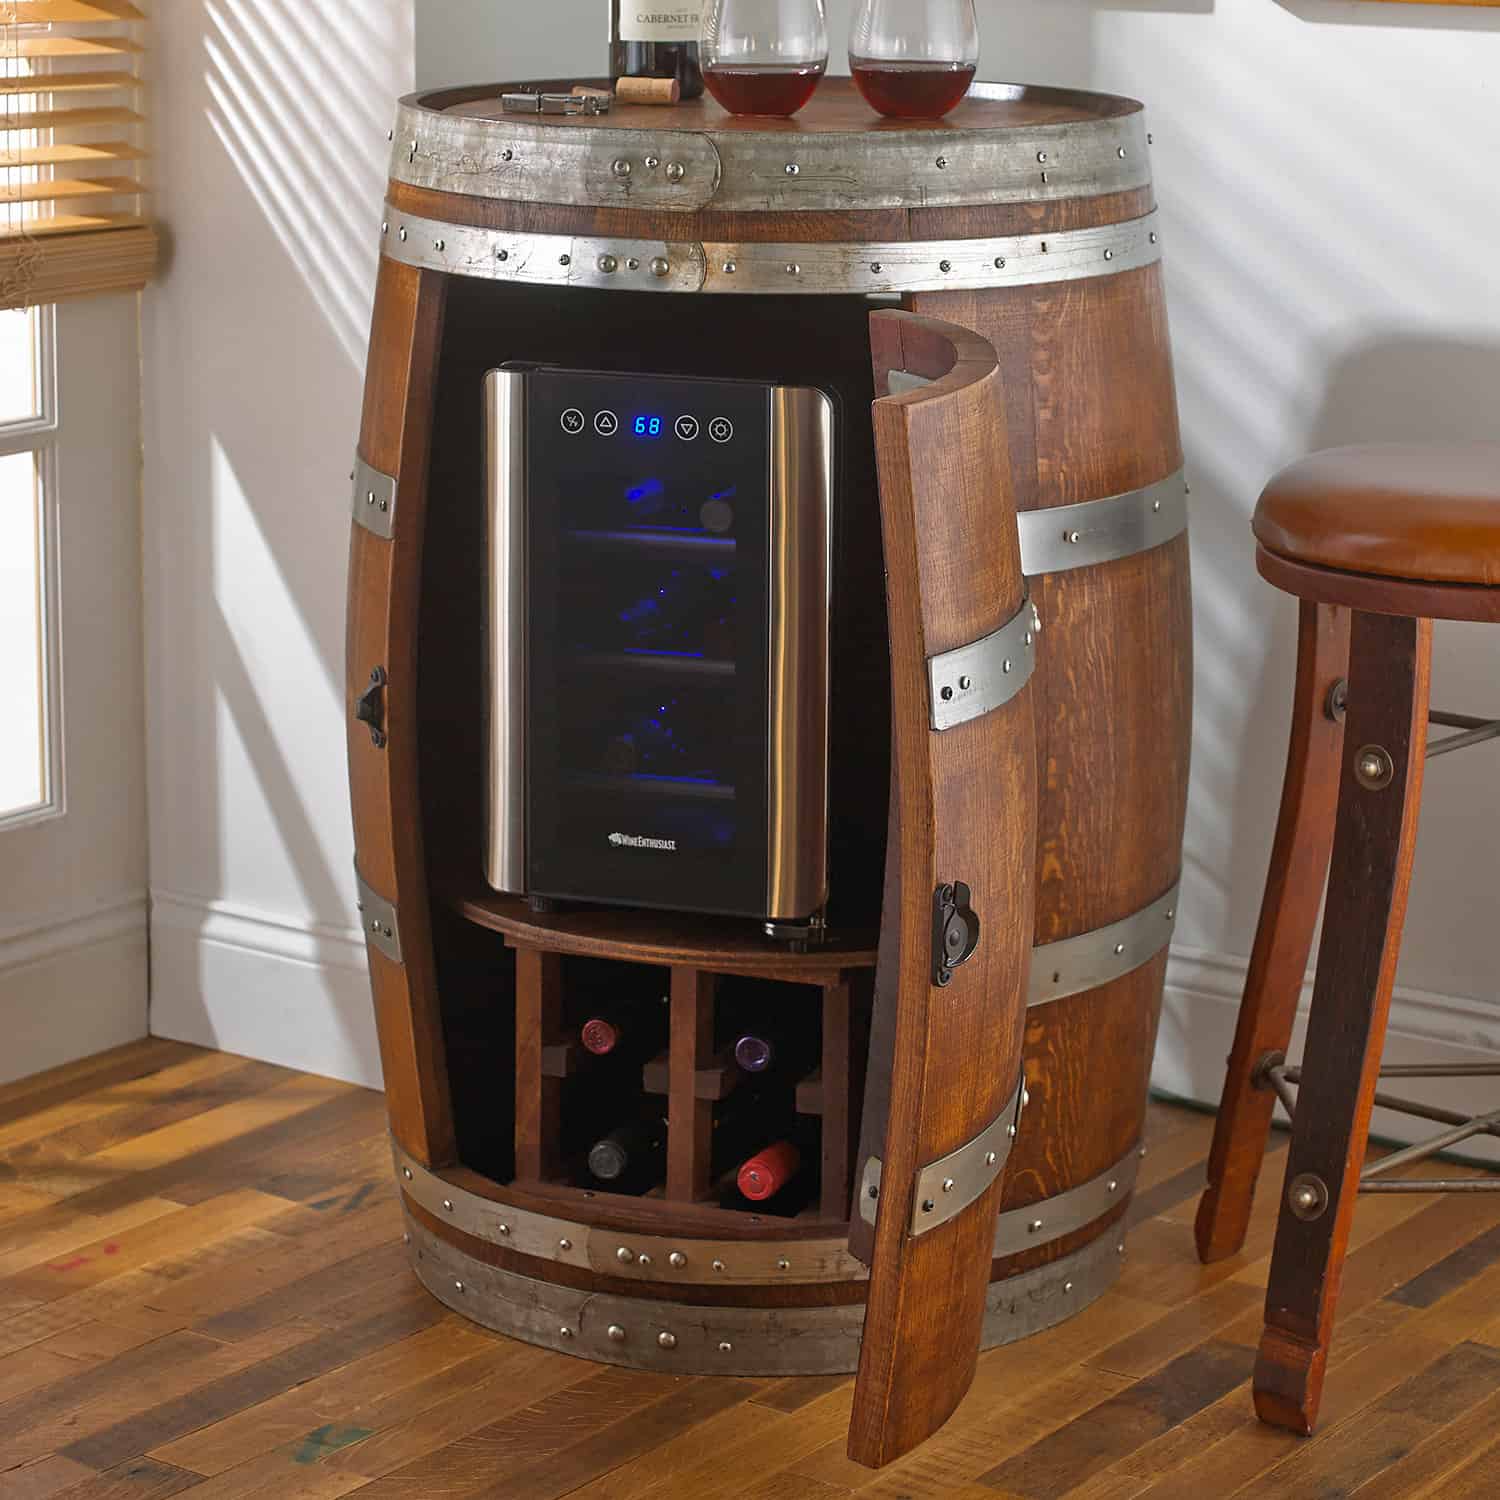 135 Wine Barrel Furniture Ideas You Can DIY or BUY [PHOTOS!]